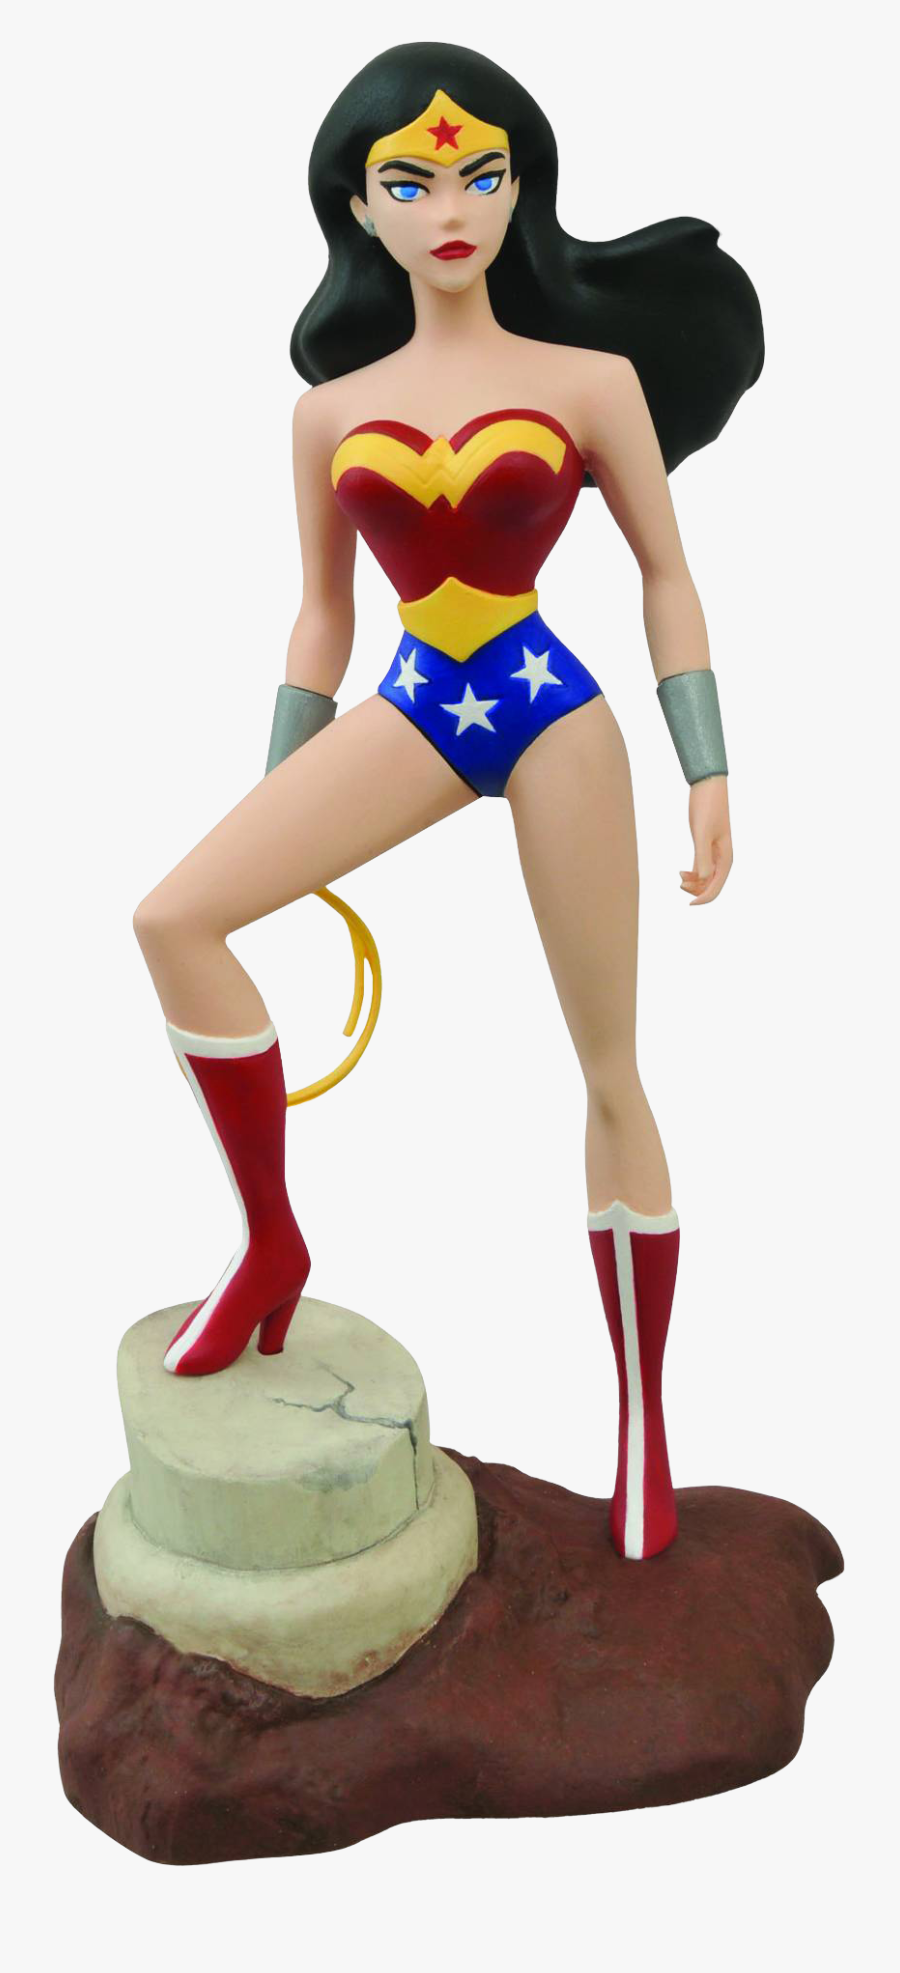 Justice League Animated Series Wonder Woman - Wonder Woman Statue Bruce Timm, Transparent Clipart